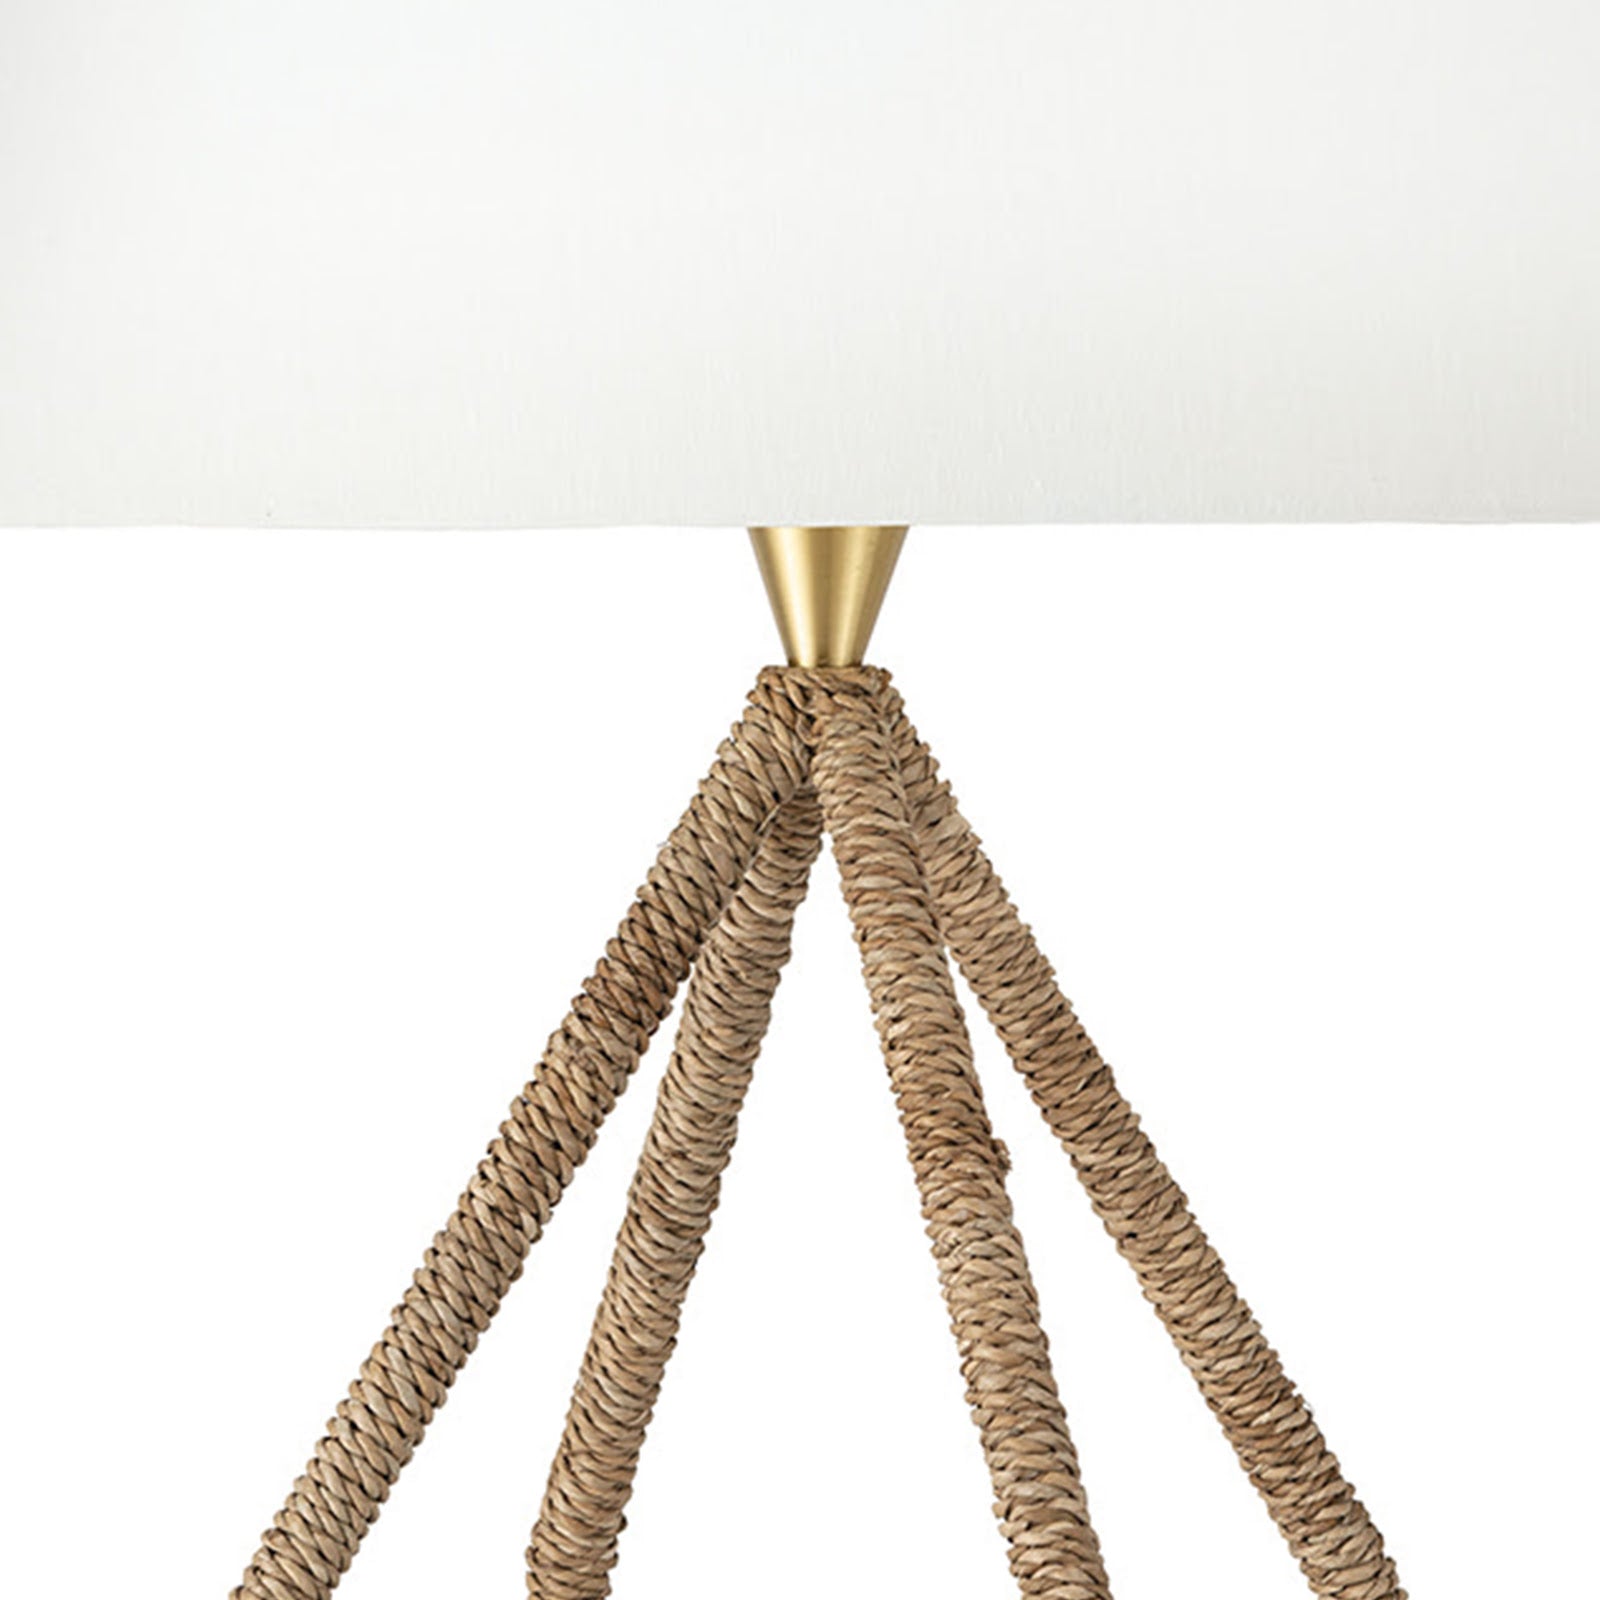 Bimini Table Lamp by Coastal Living